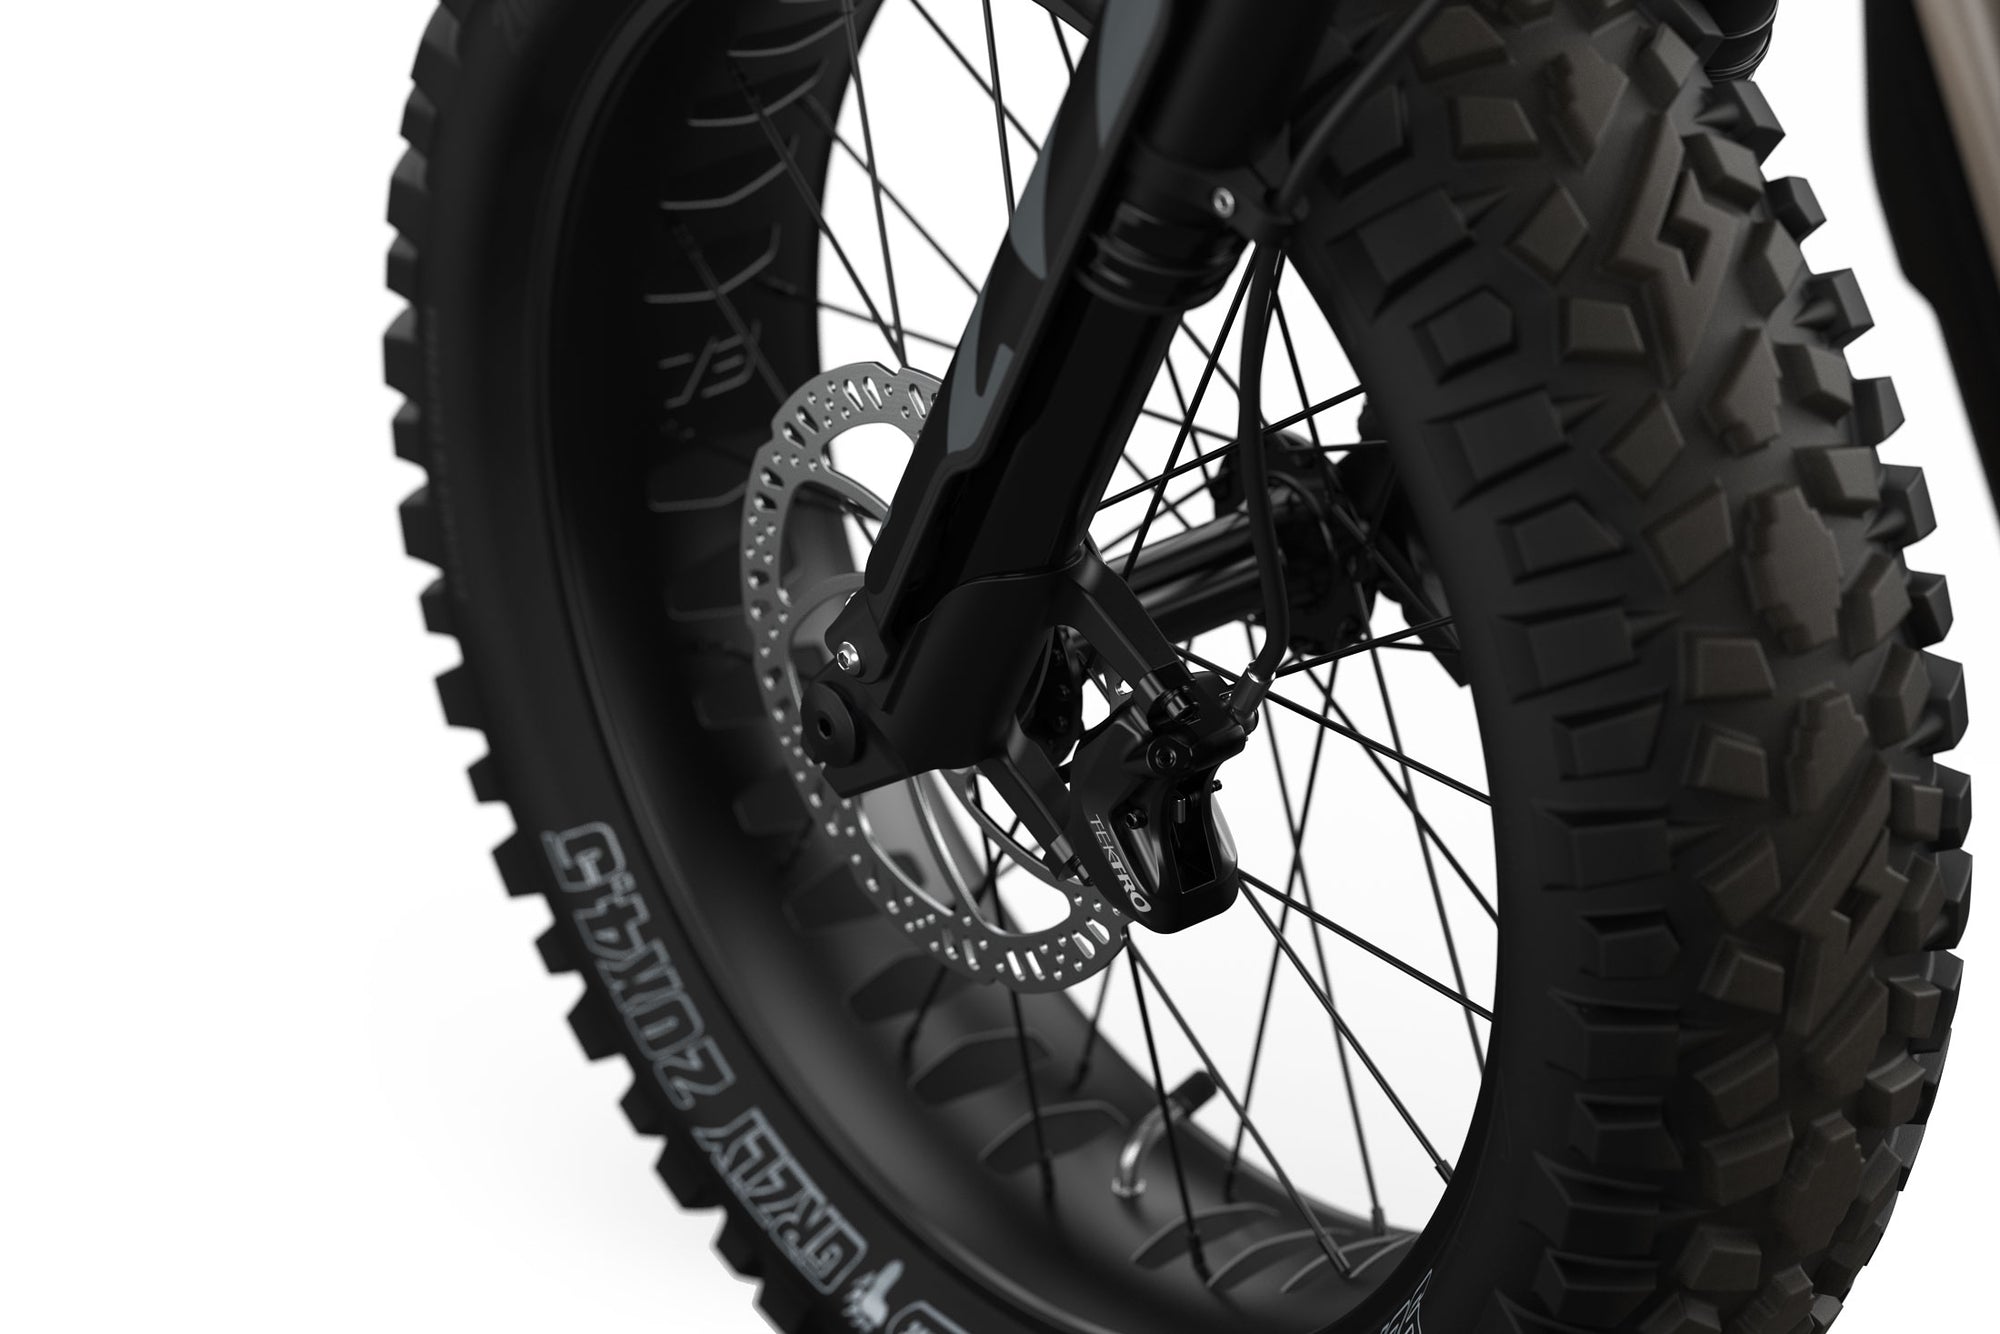 Detail shot of SUPER73 S Adventure ebike tire.